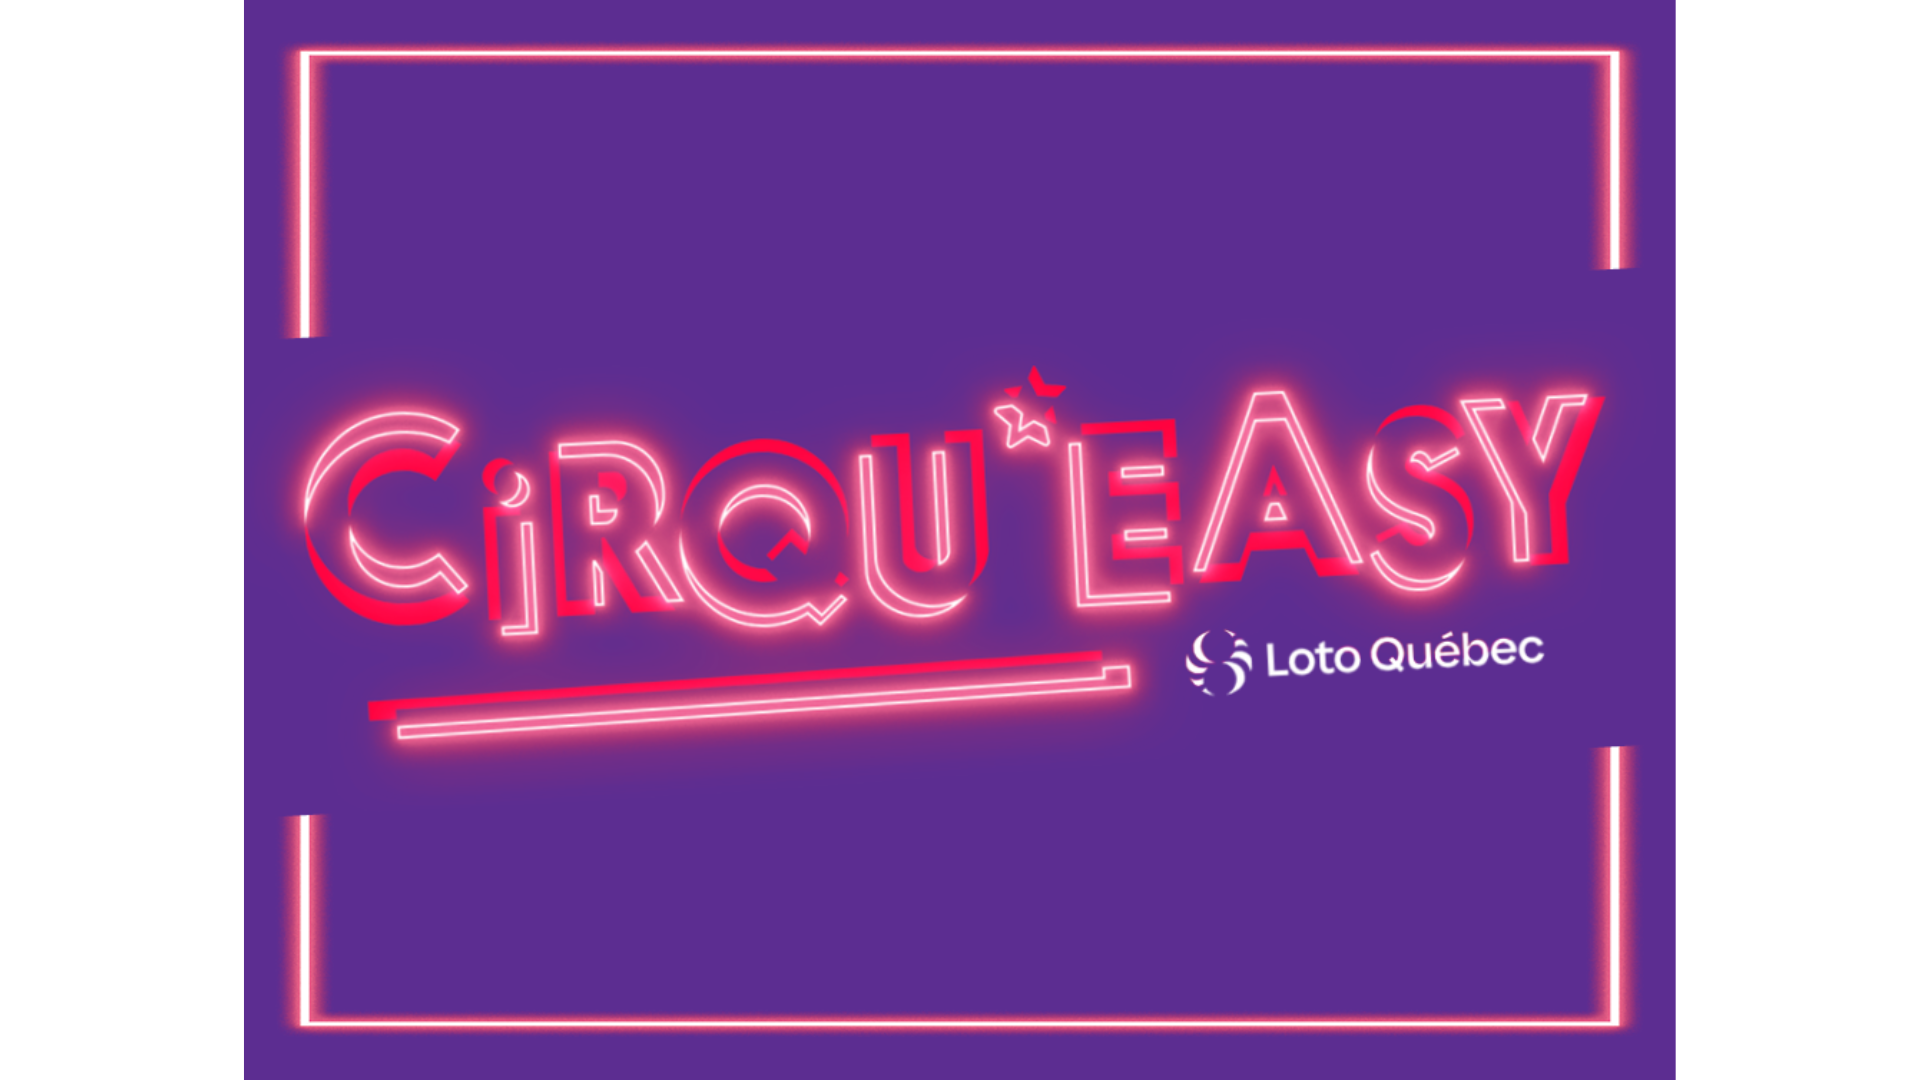 Ciruq'easy logo